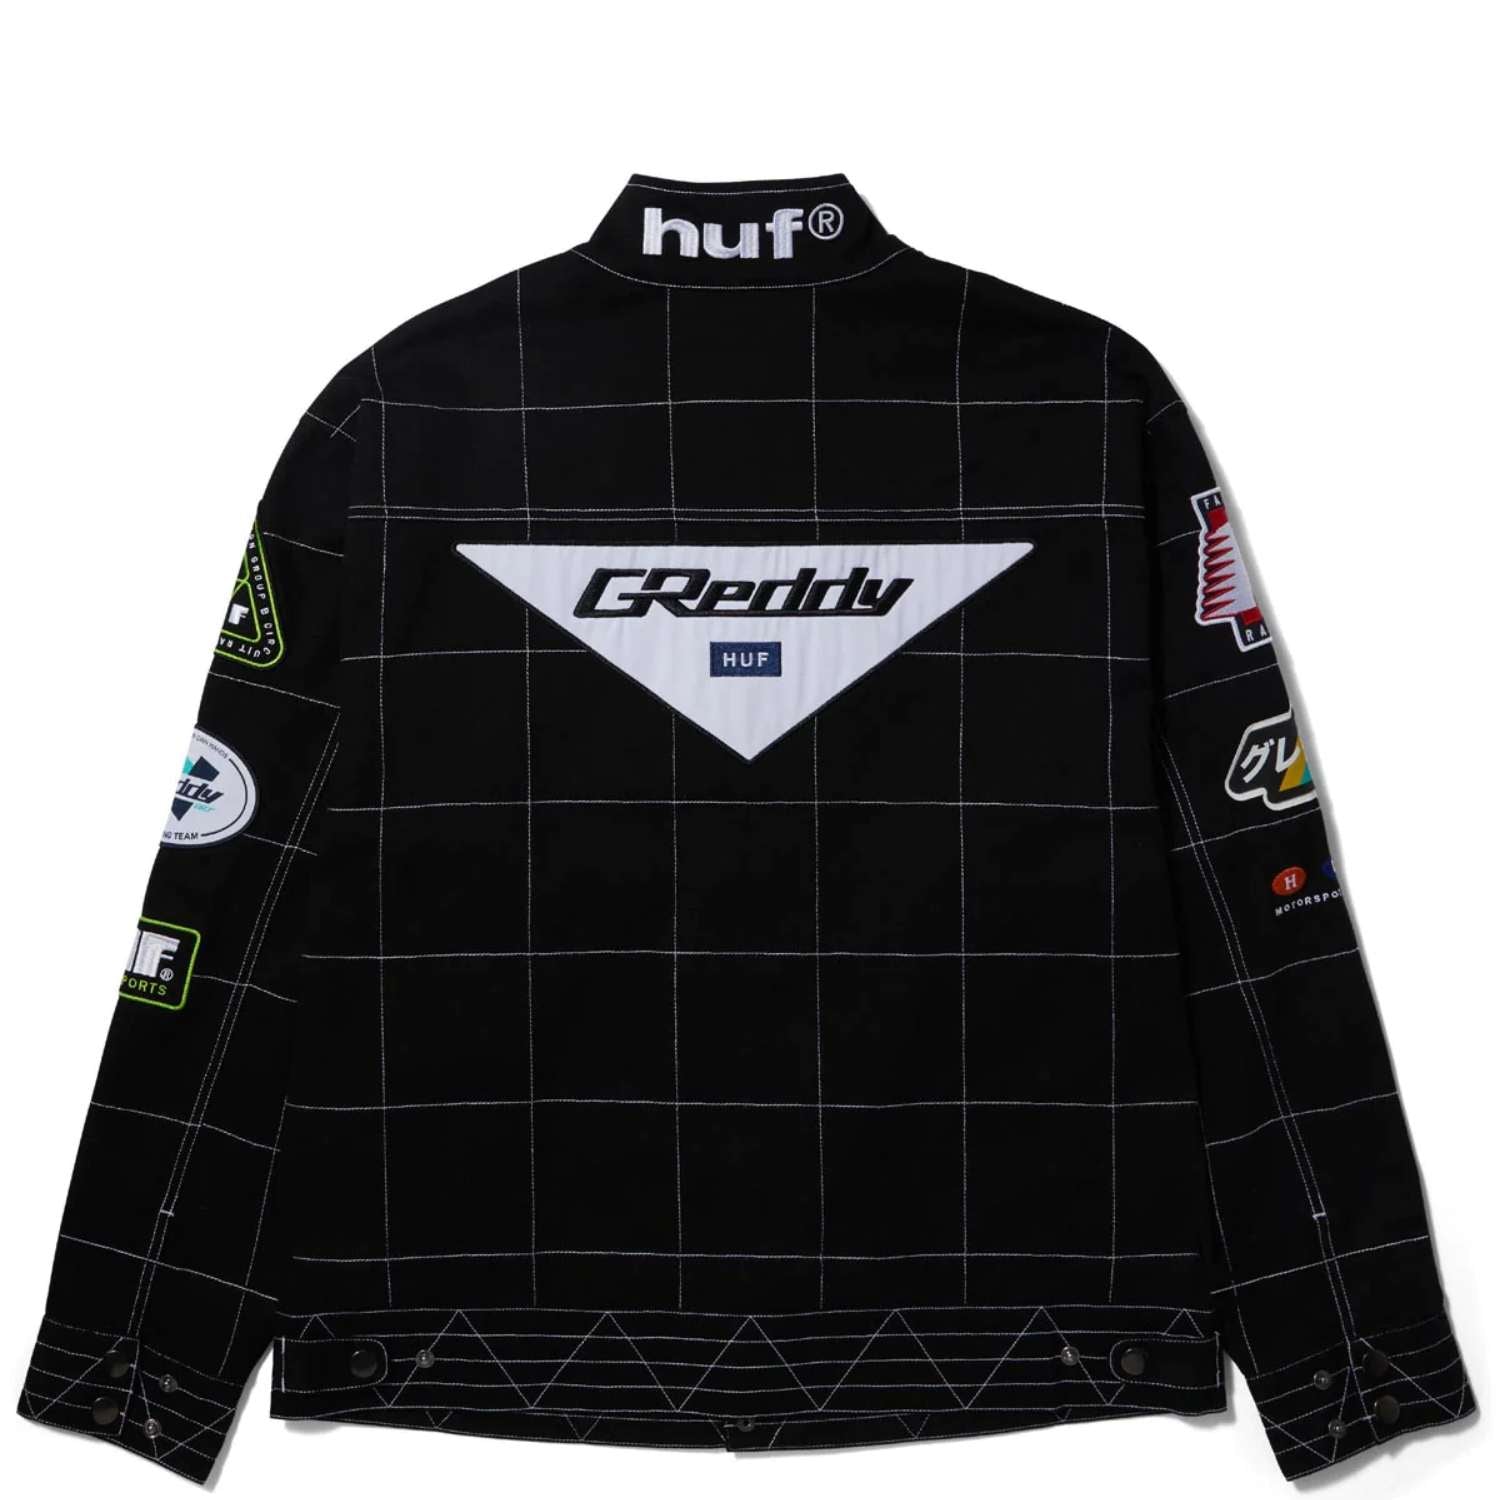 HUF X Greddy - Racing Team Jacket - Black